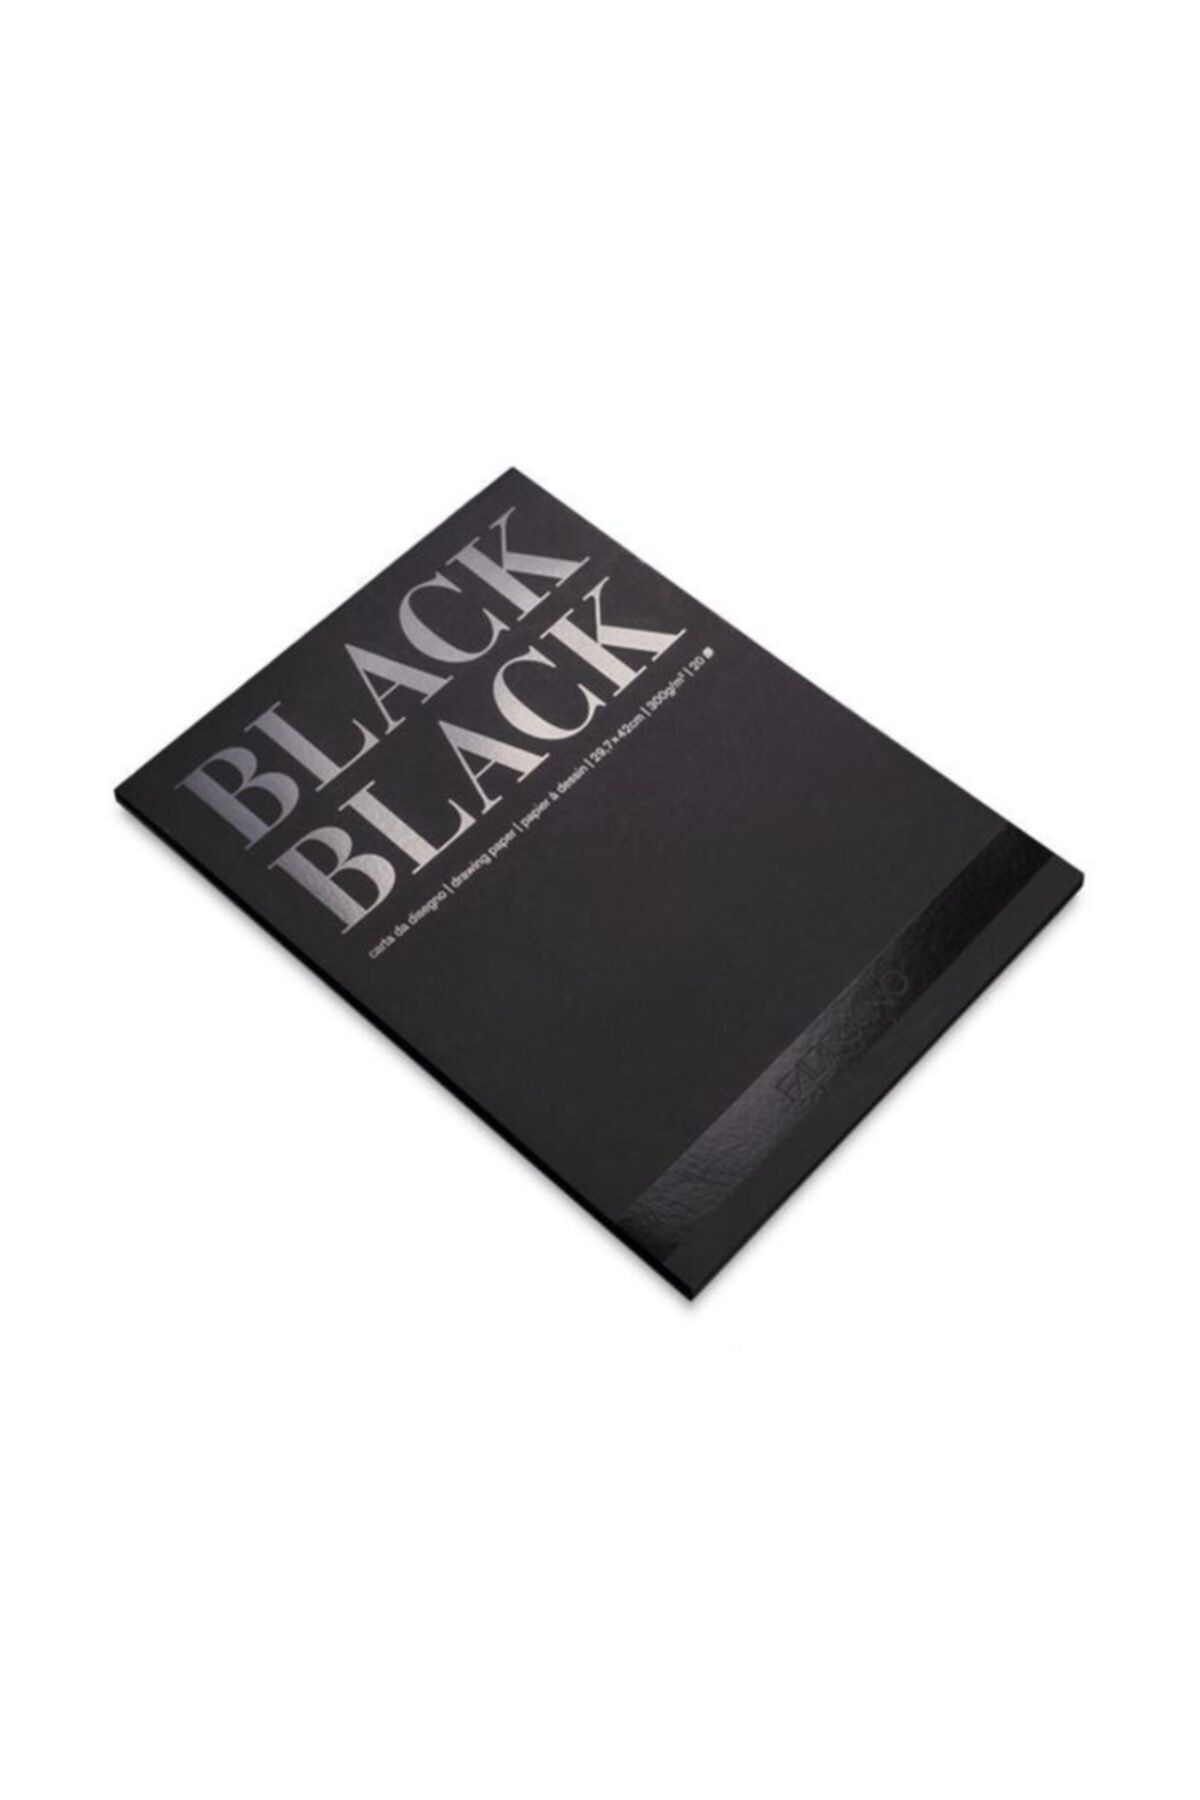 Fabriano : Black Black : Siyah Çizim Defteri : 300 gr : A4 : 20 Yaprak